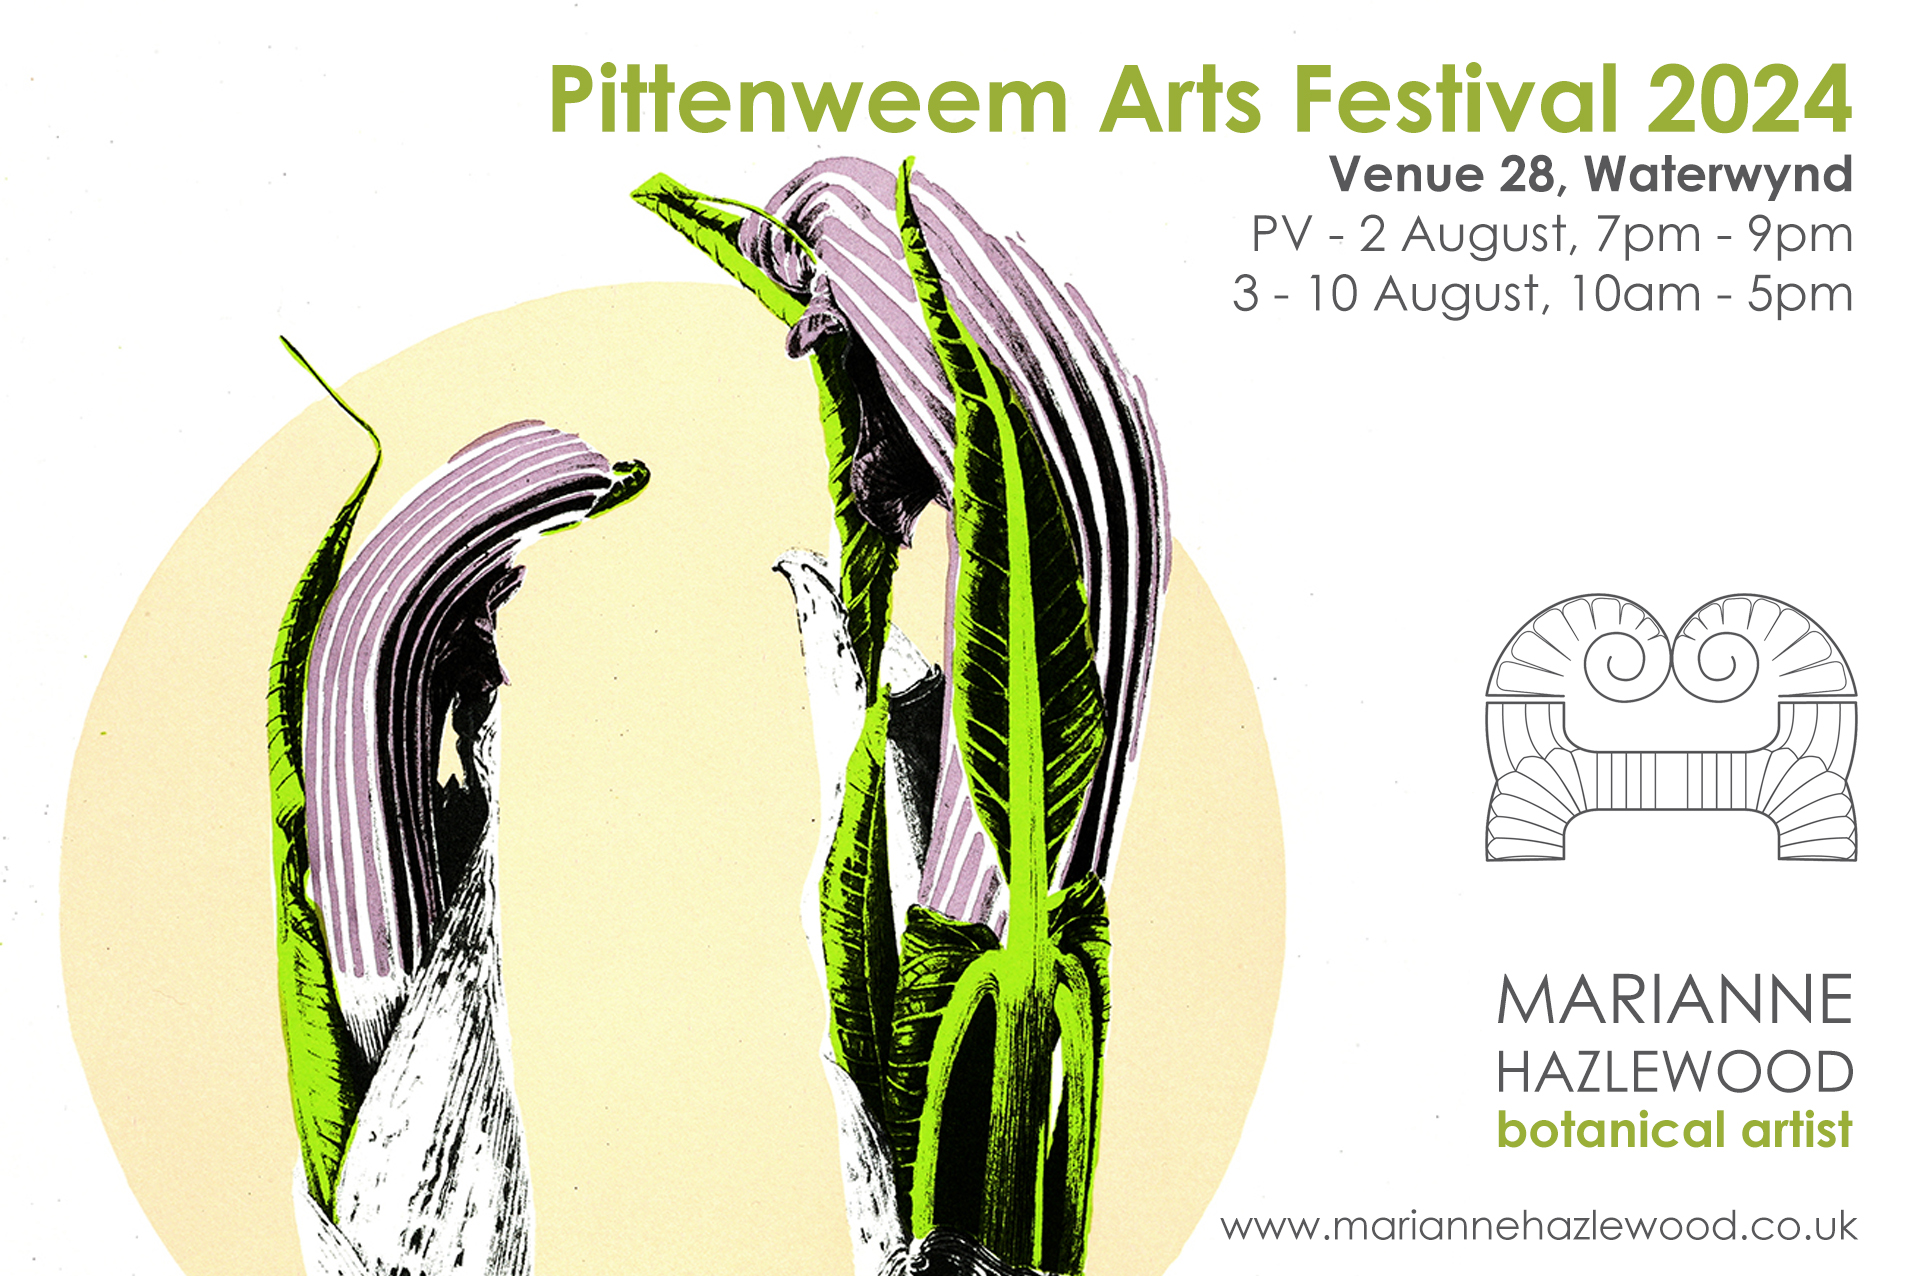 Pittenweem Arts Festival, Venue 28, PV 2 August 7pm - 9pm, 3 - 10 August, 10am - 5pm, Marianne Hazlewood, botanical artist, www,mariannehazlewood.co.uk, Arisaema ringens screen print